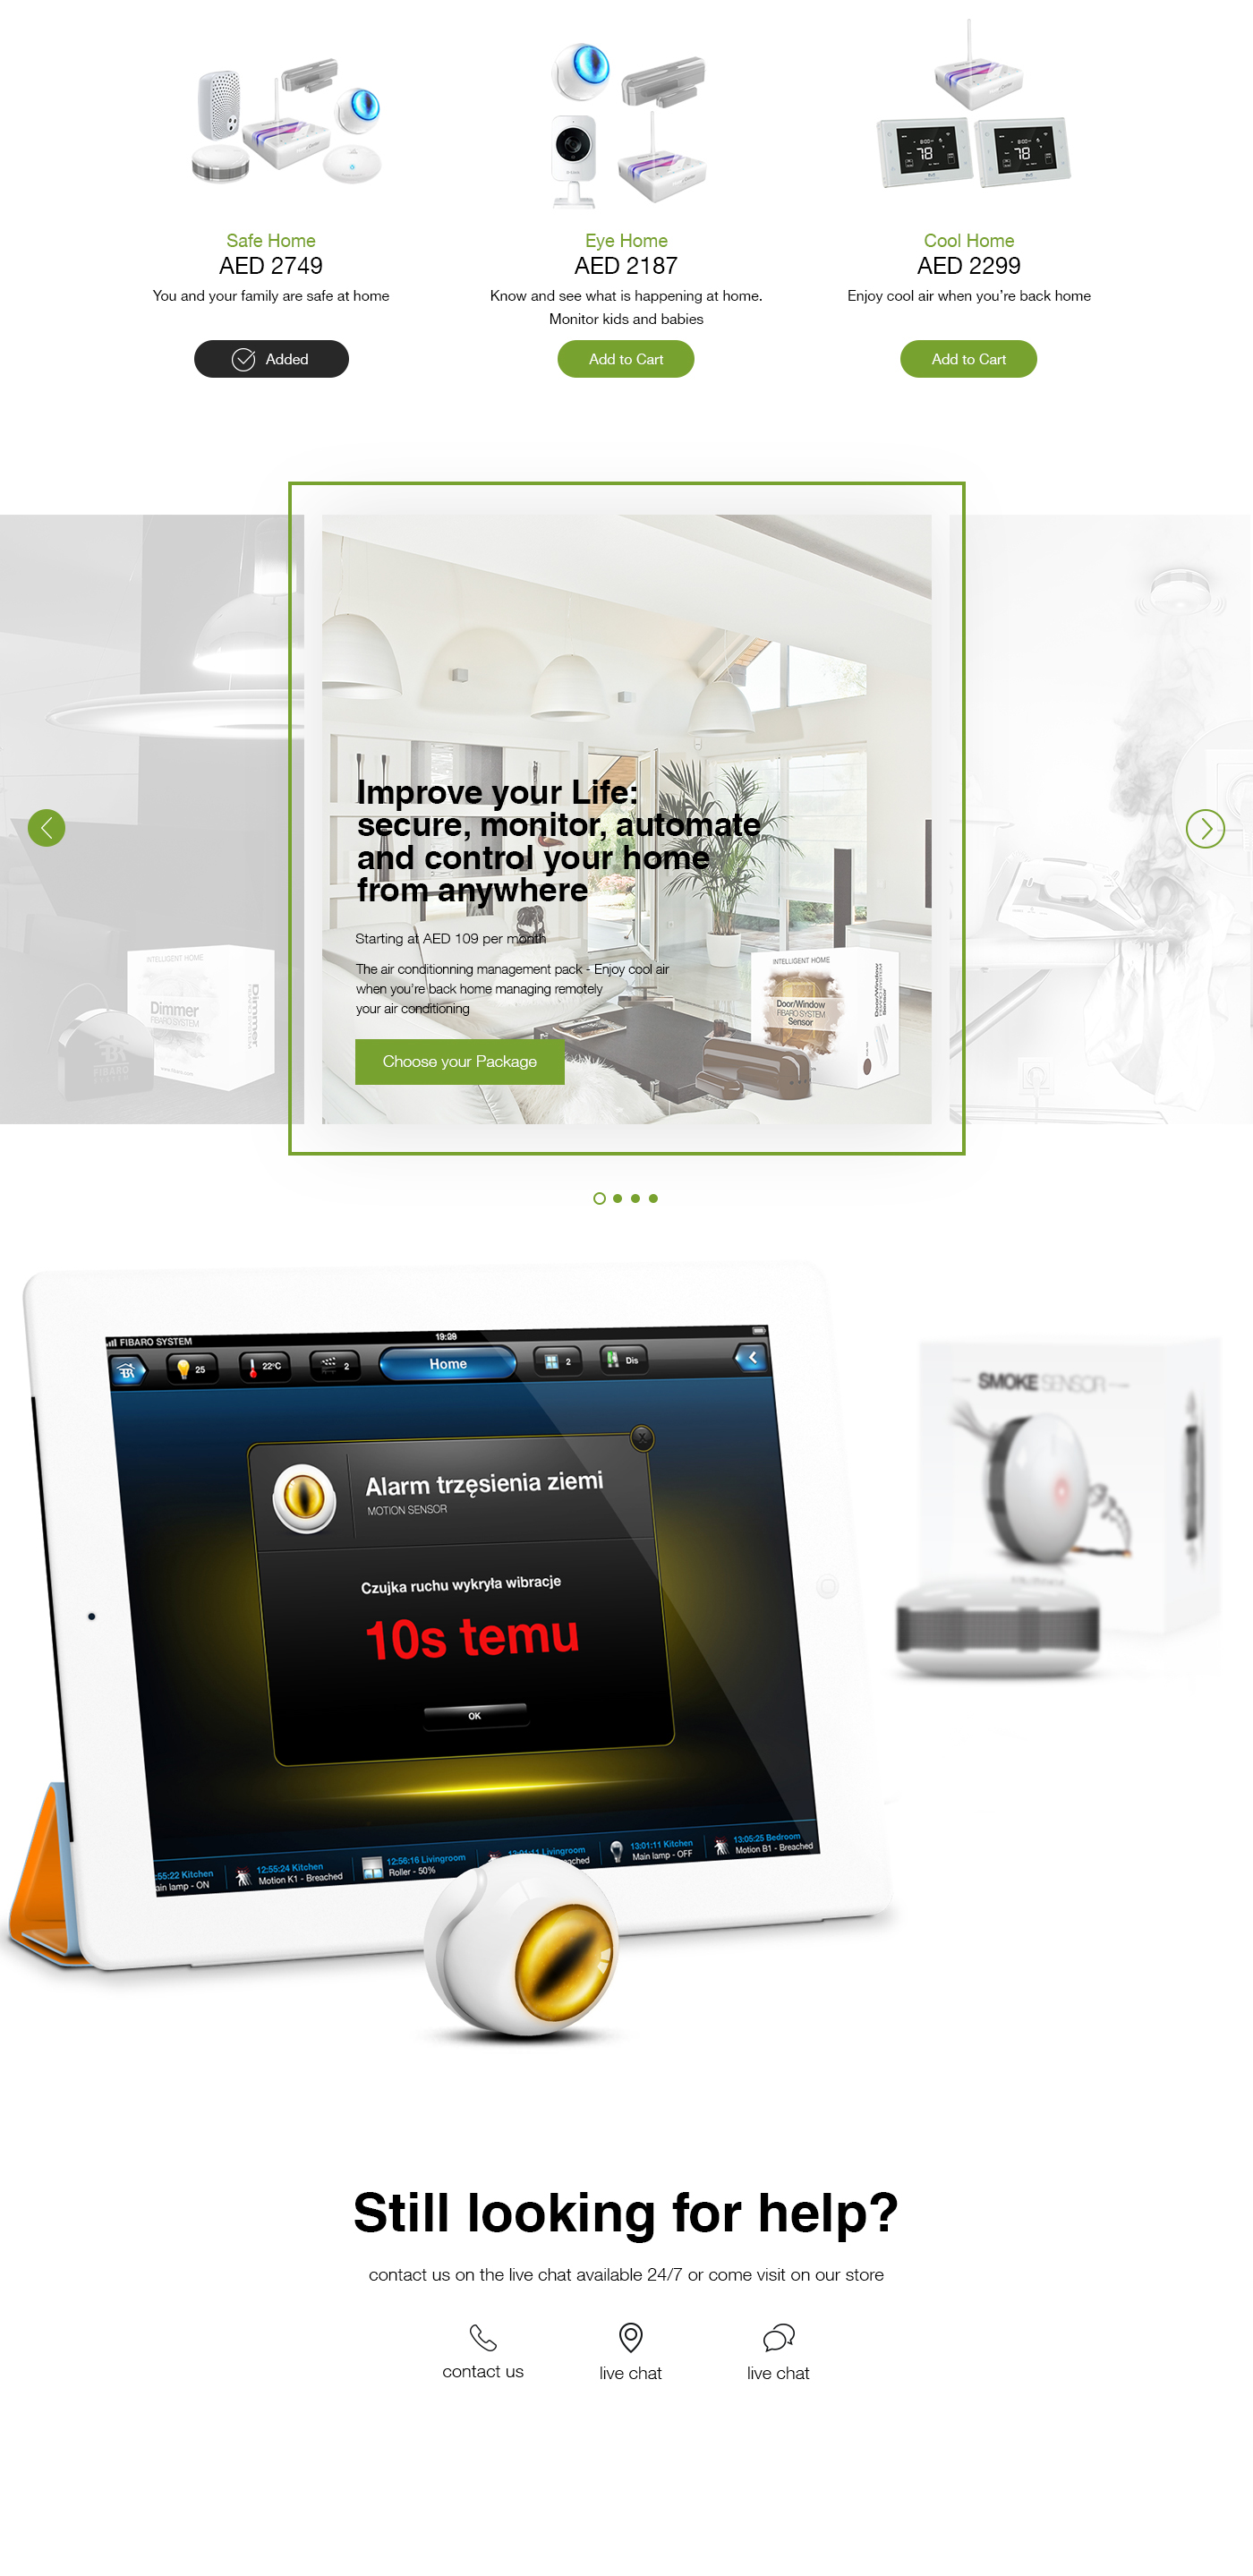 Smart Home etisalat UAE fibaro Home system Home Engine pixelzeesh UI ux